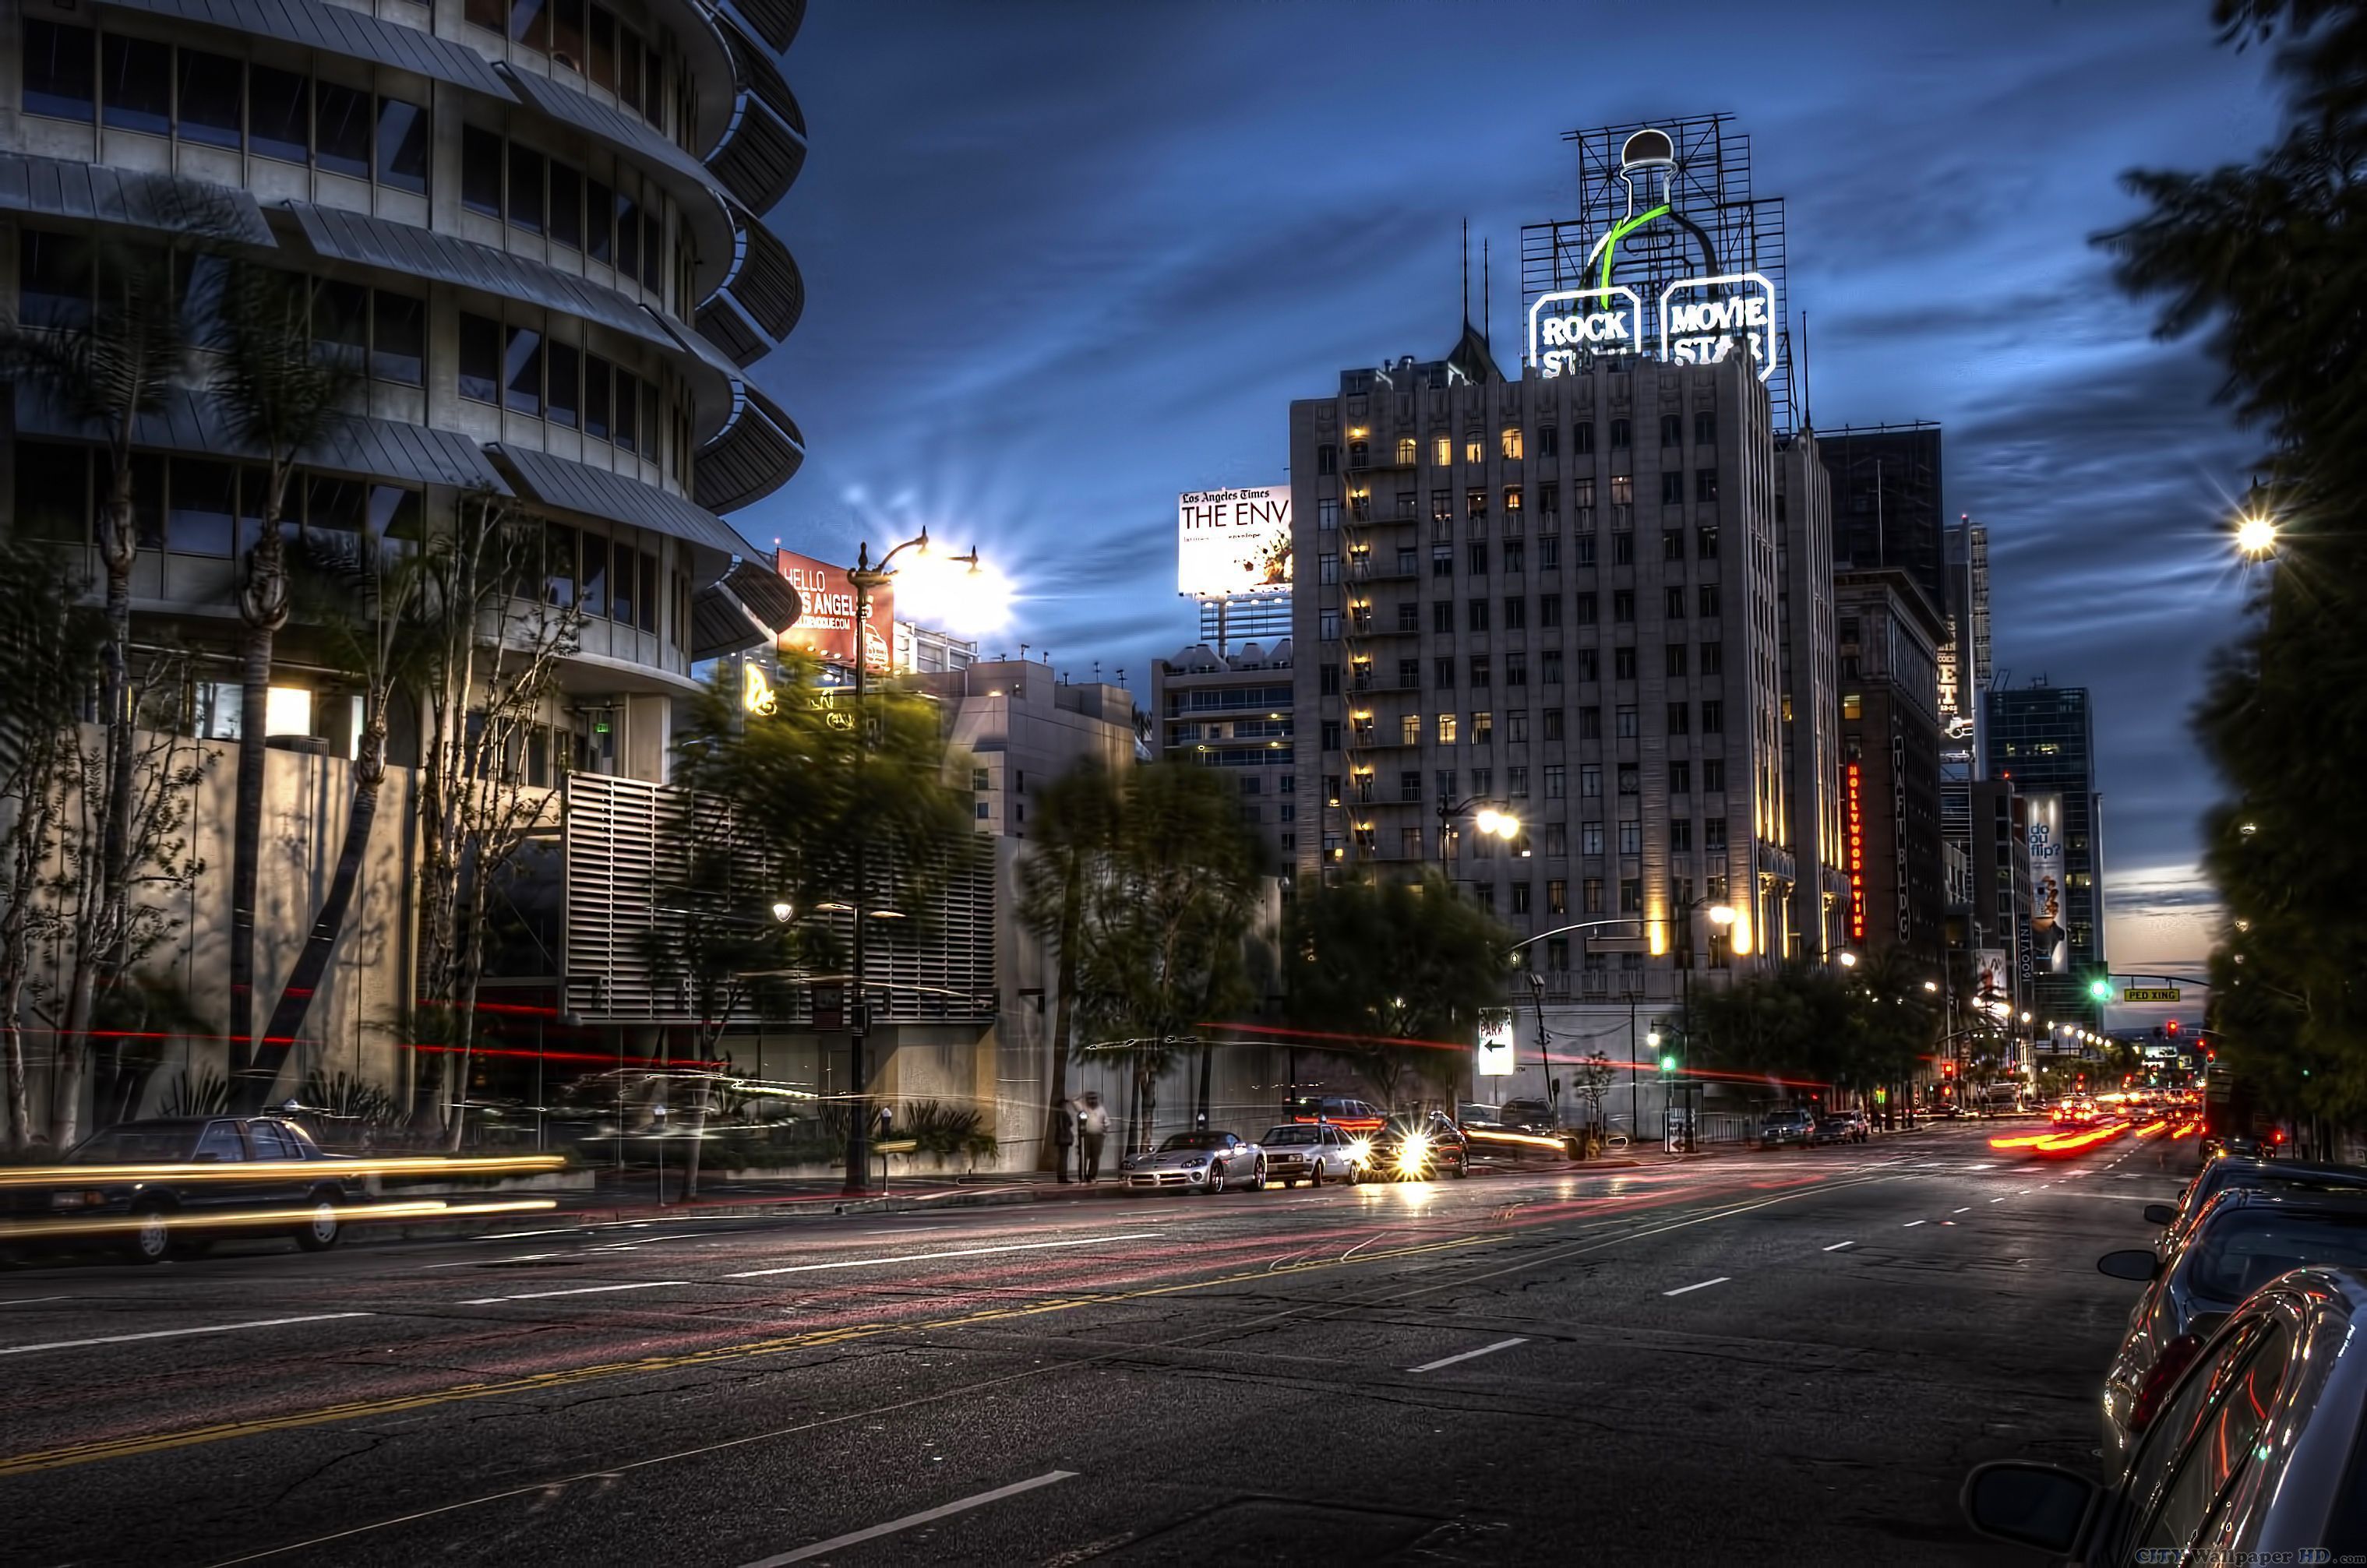 Los Angeles Streets At Night - wallpaper.